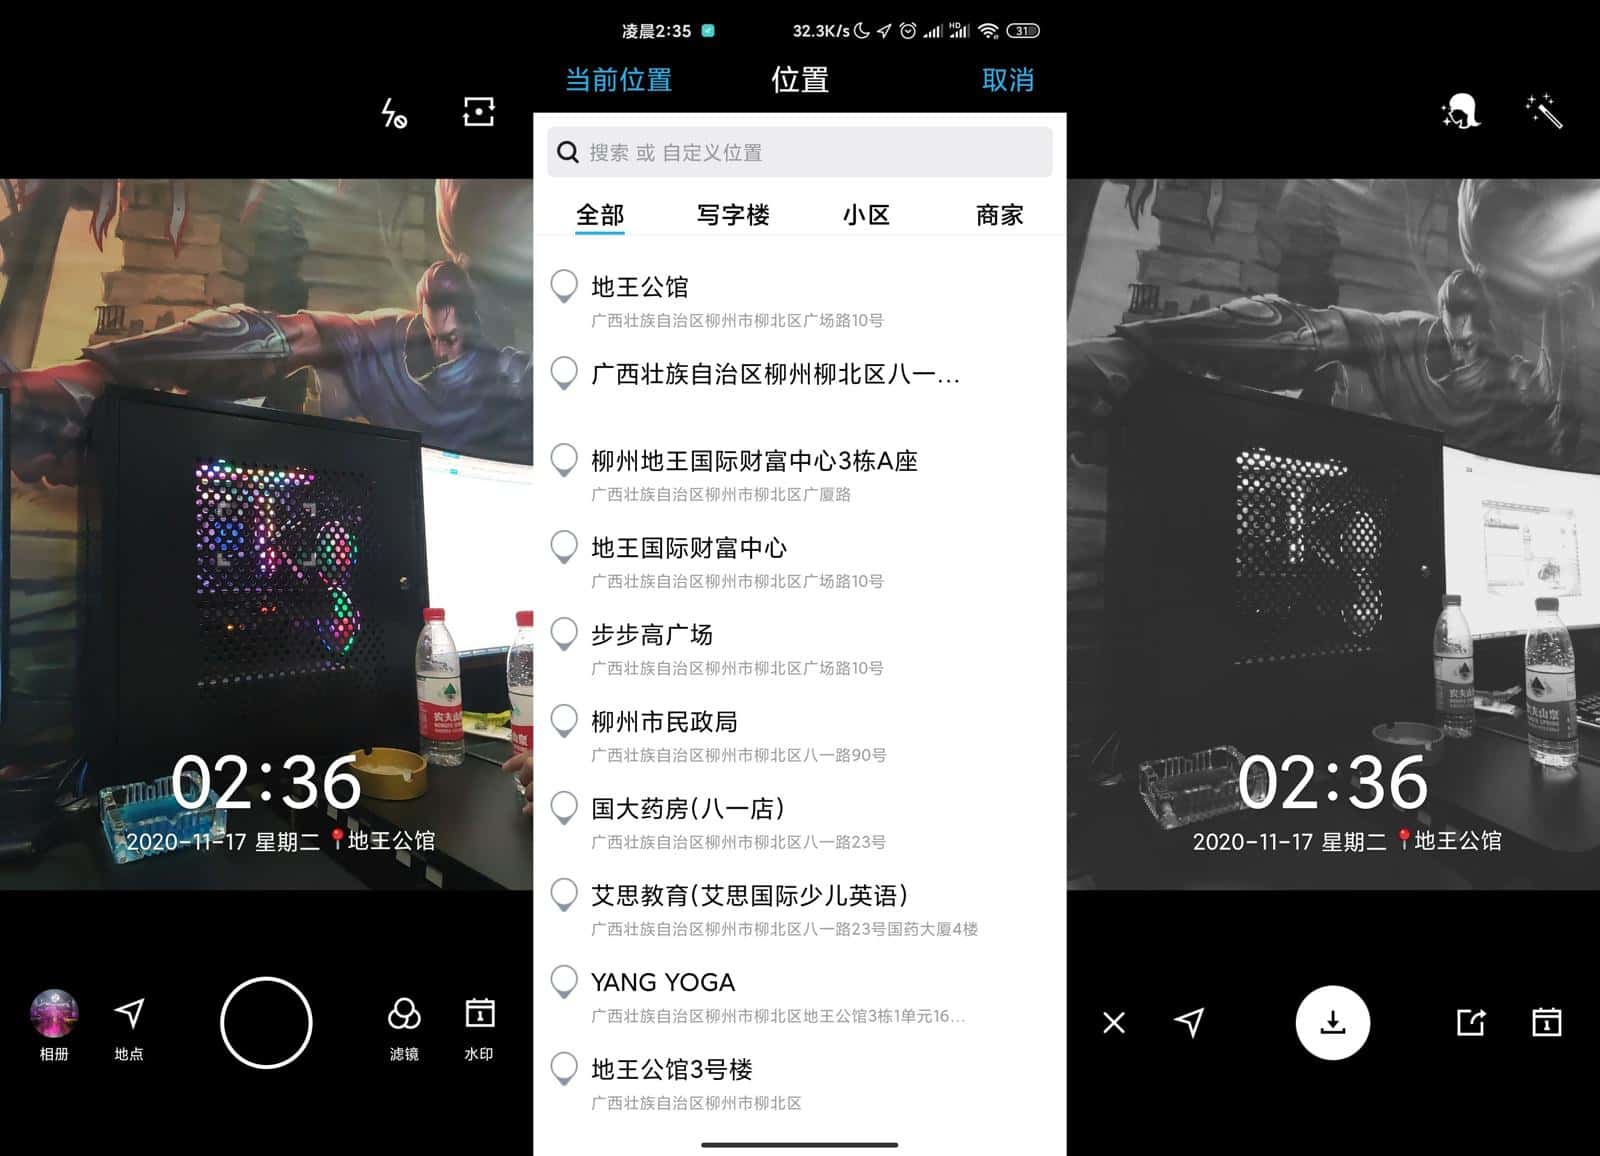 Android 水印相机 v4.0.0.625 去广告纯净版-无痕哥's Blog